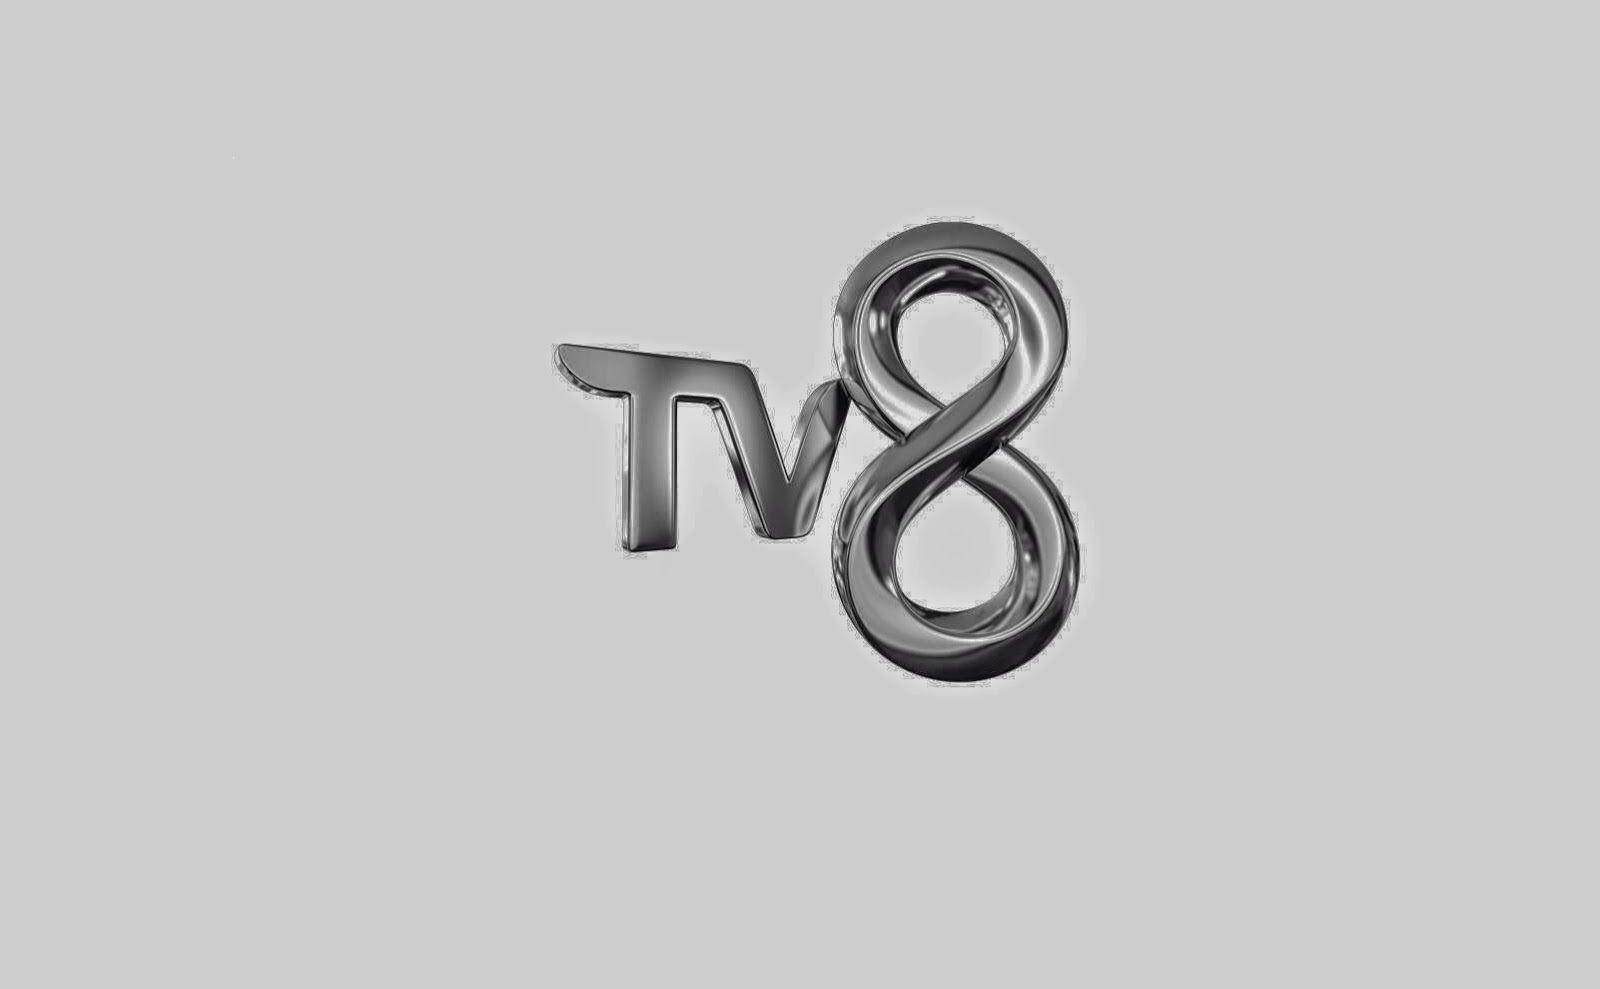 Fox kesintisiz izle. TV 8. Tv8 Телеканал. Tv8 логотип. Tv8 (Турция).